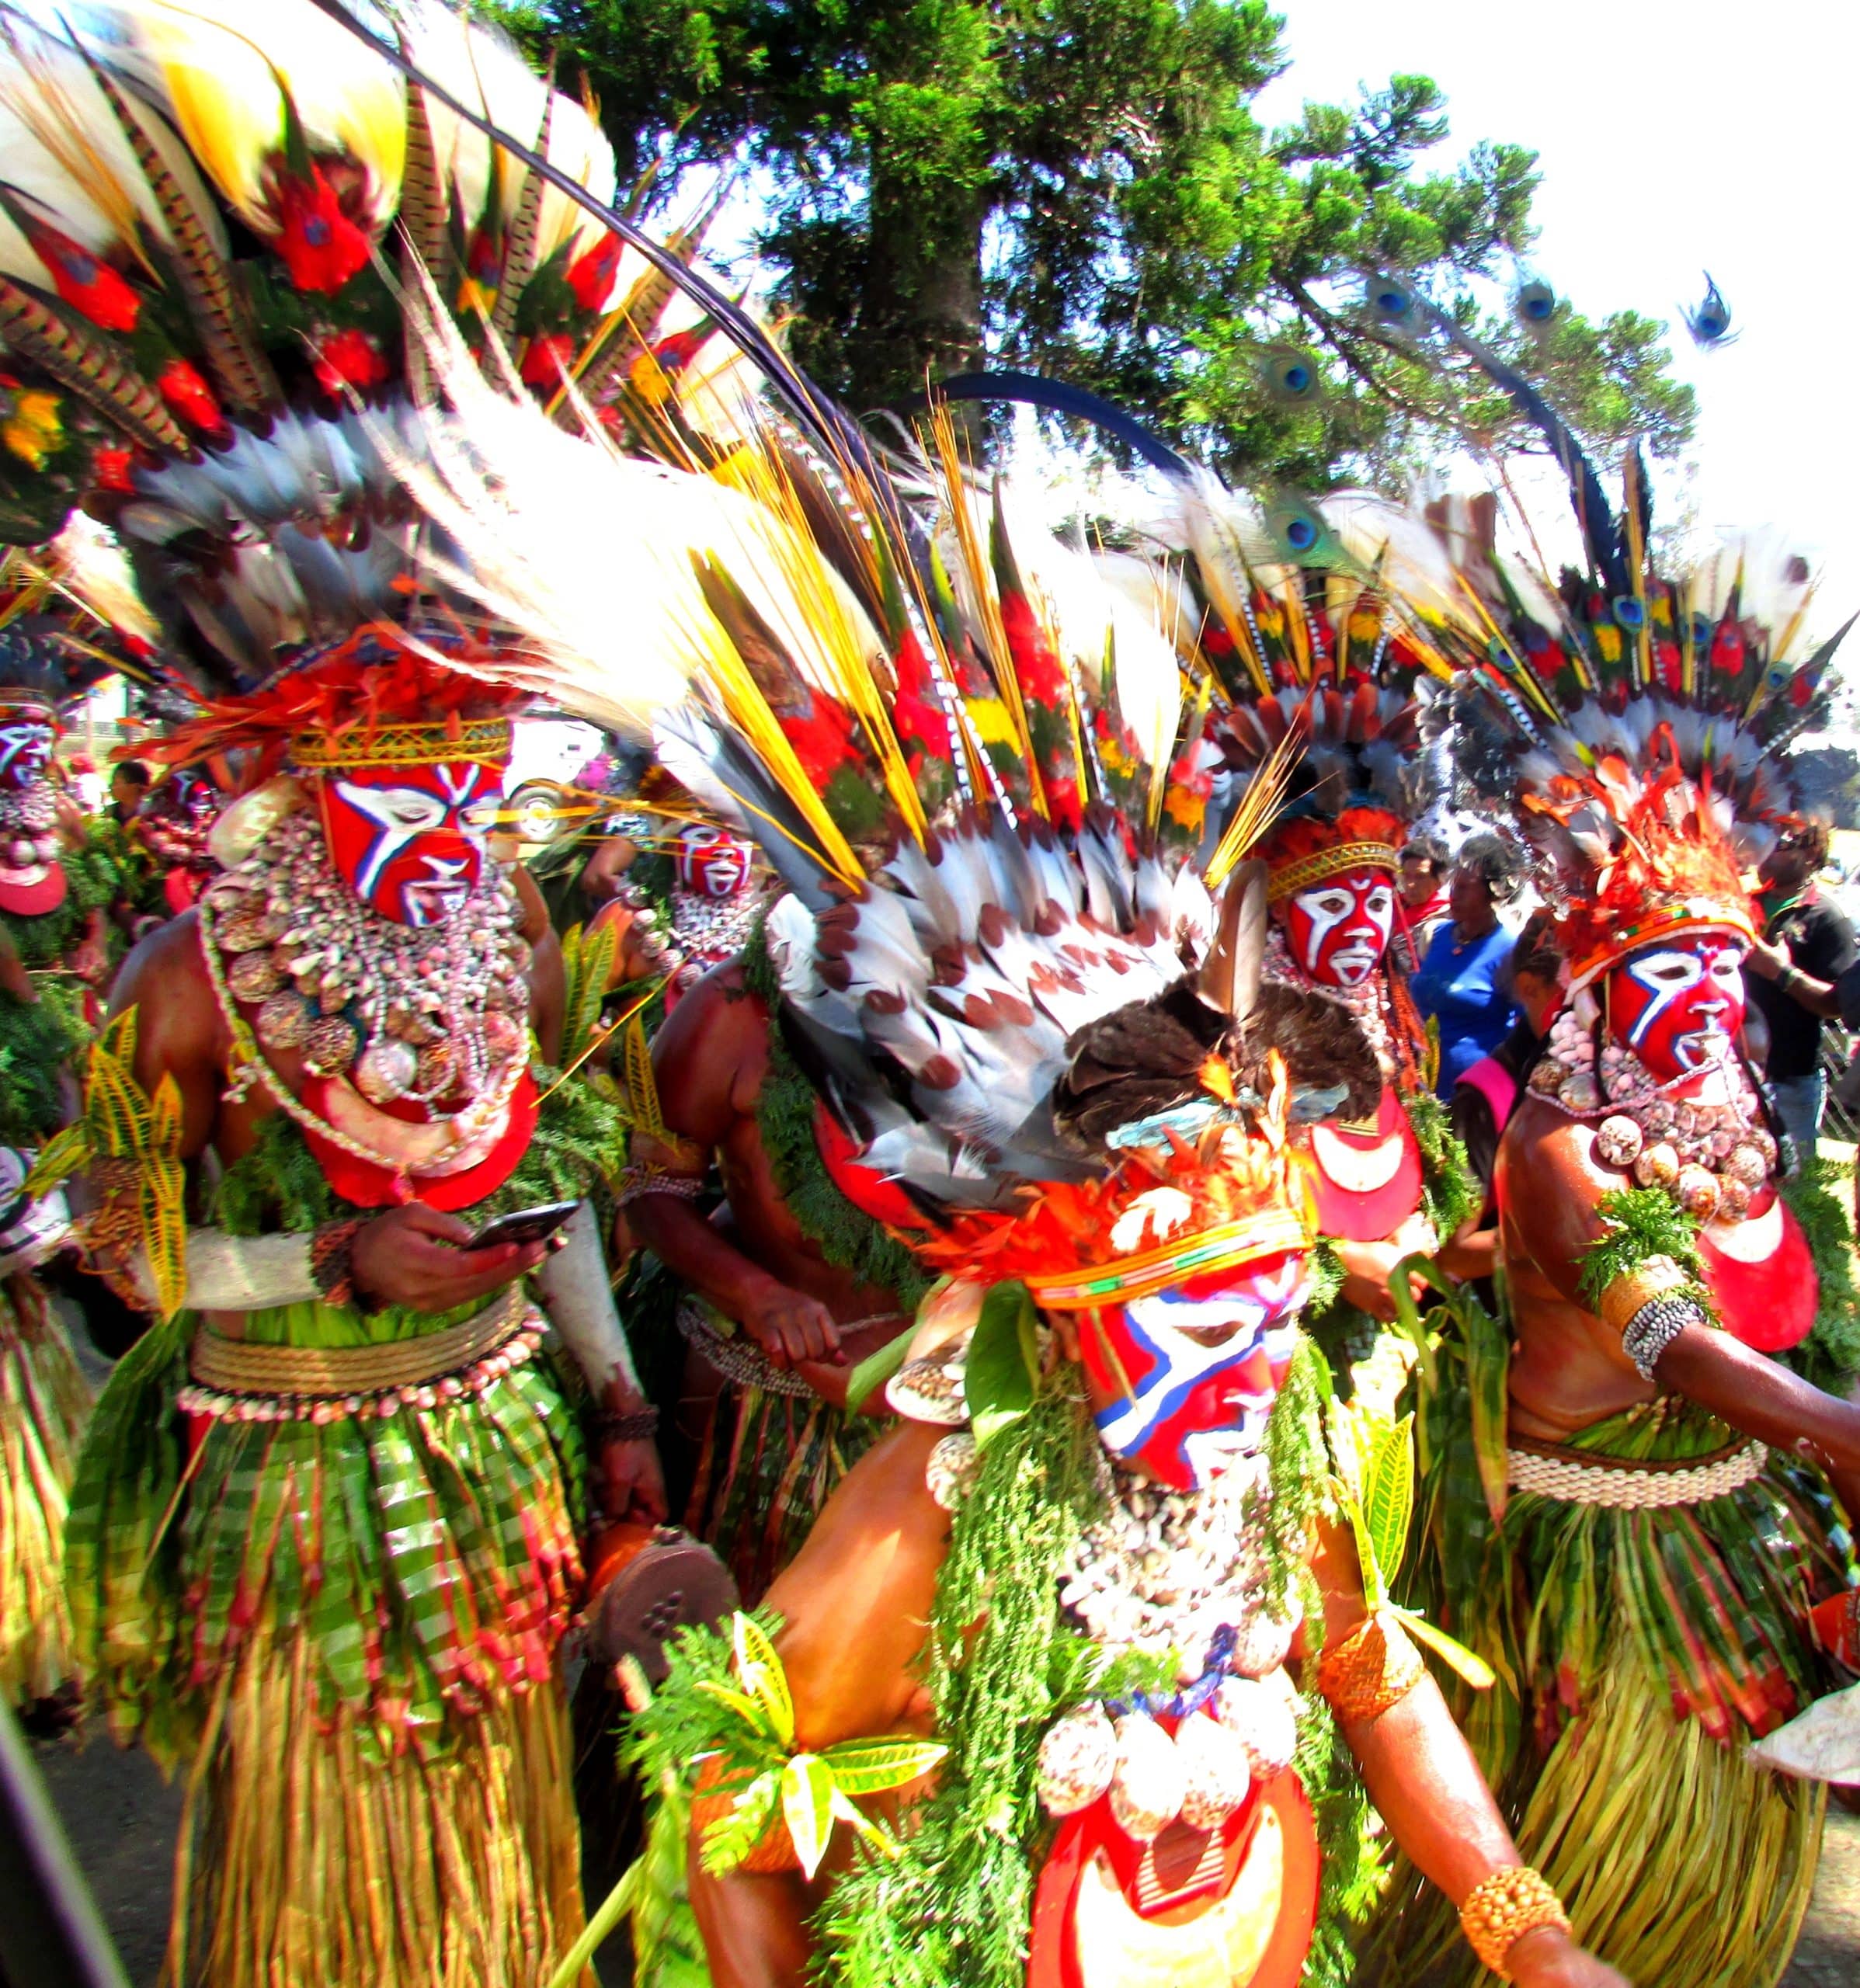 Local communities in Papua New Guinea wearing traditional headdresses. Picture credits: Miriam Supuma